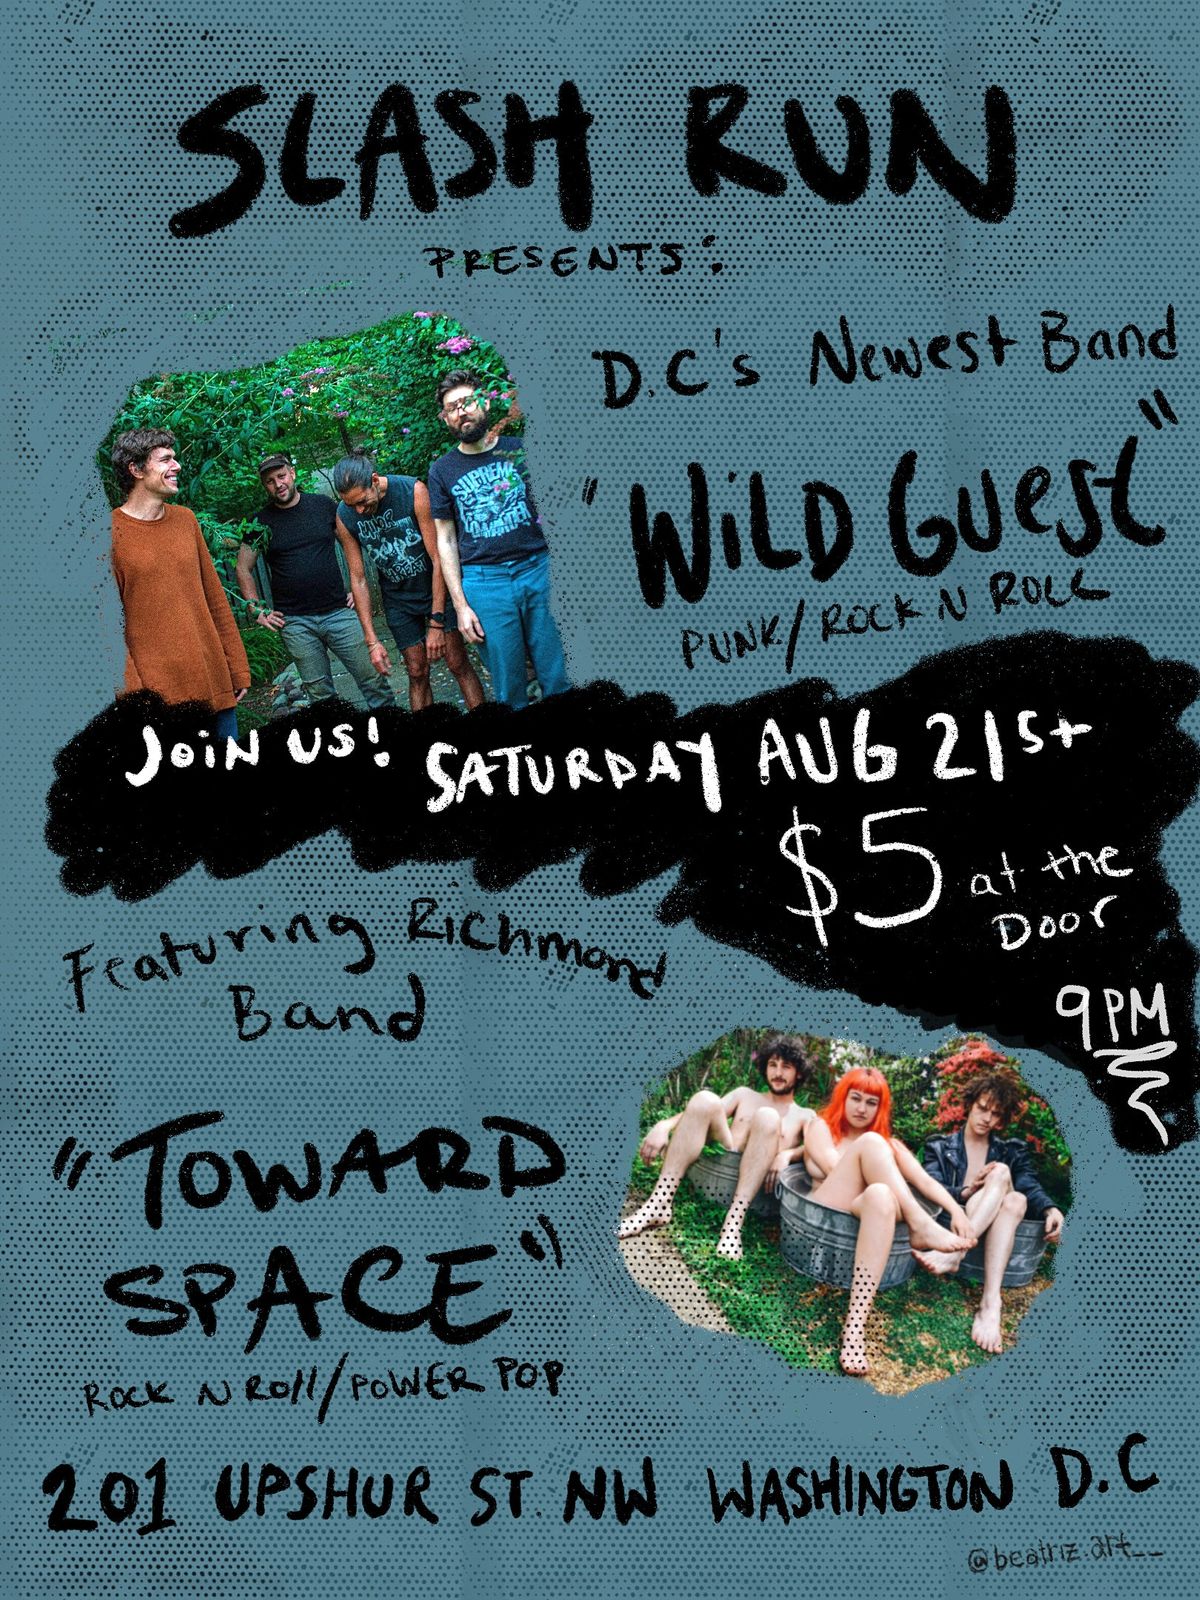 Toward Space (RVA) \/\/ Wild Guest ( New DC punk bands premier show)